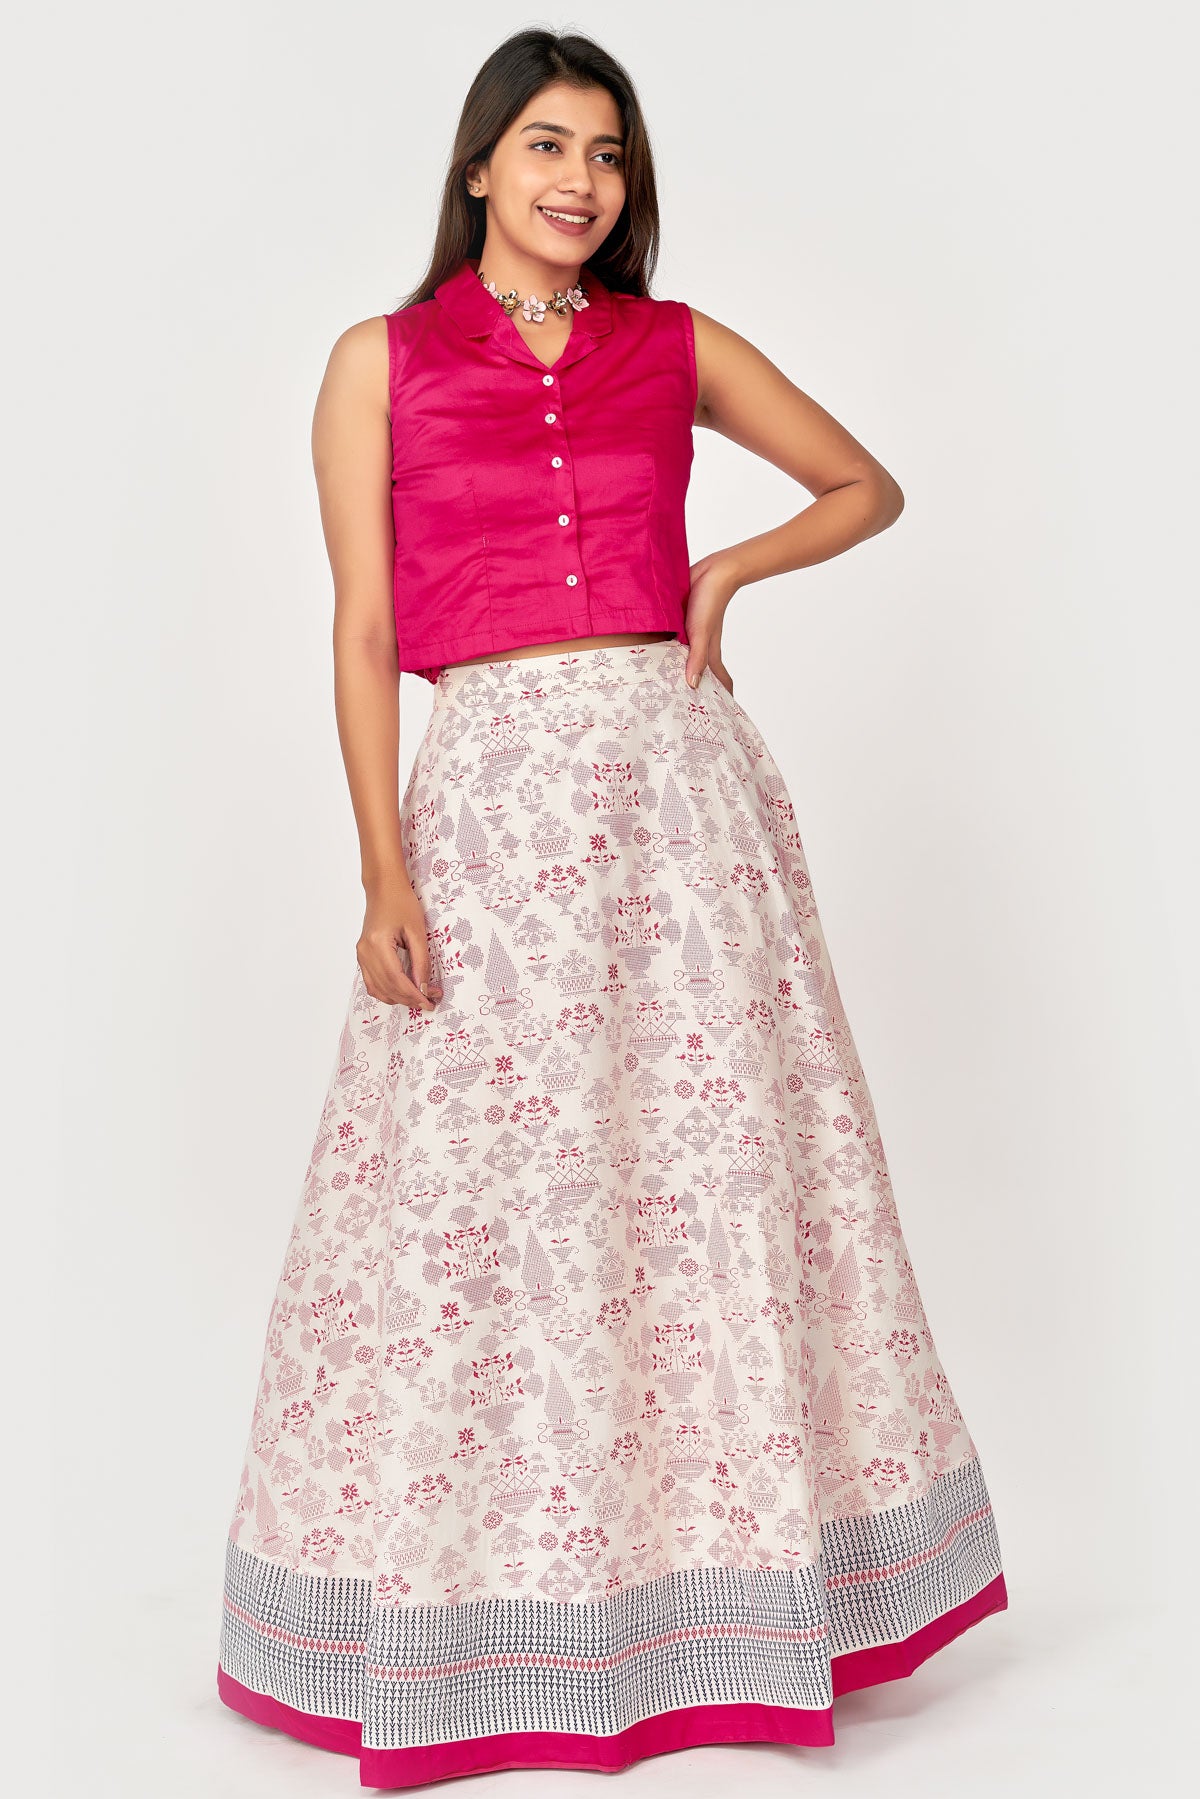 Solid Collar Shirt Style Crop Top & Skirt Set - Pink